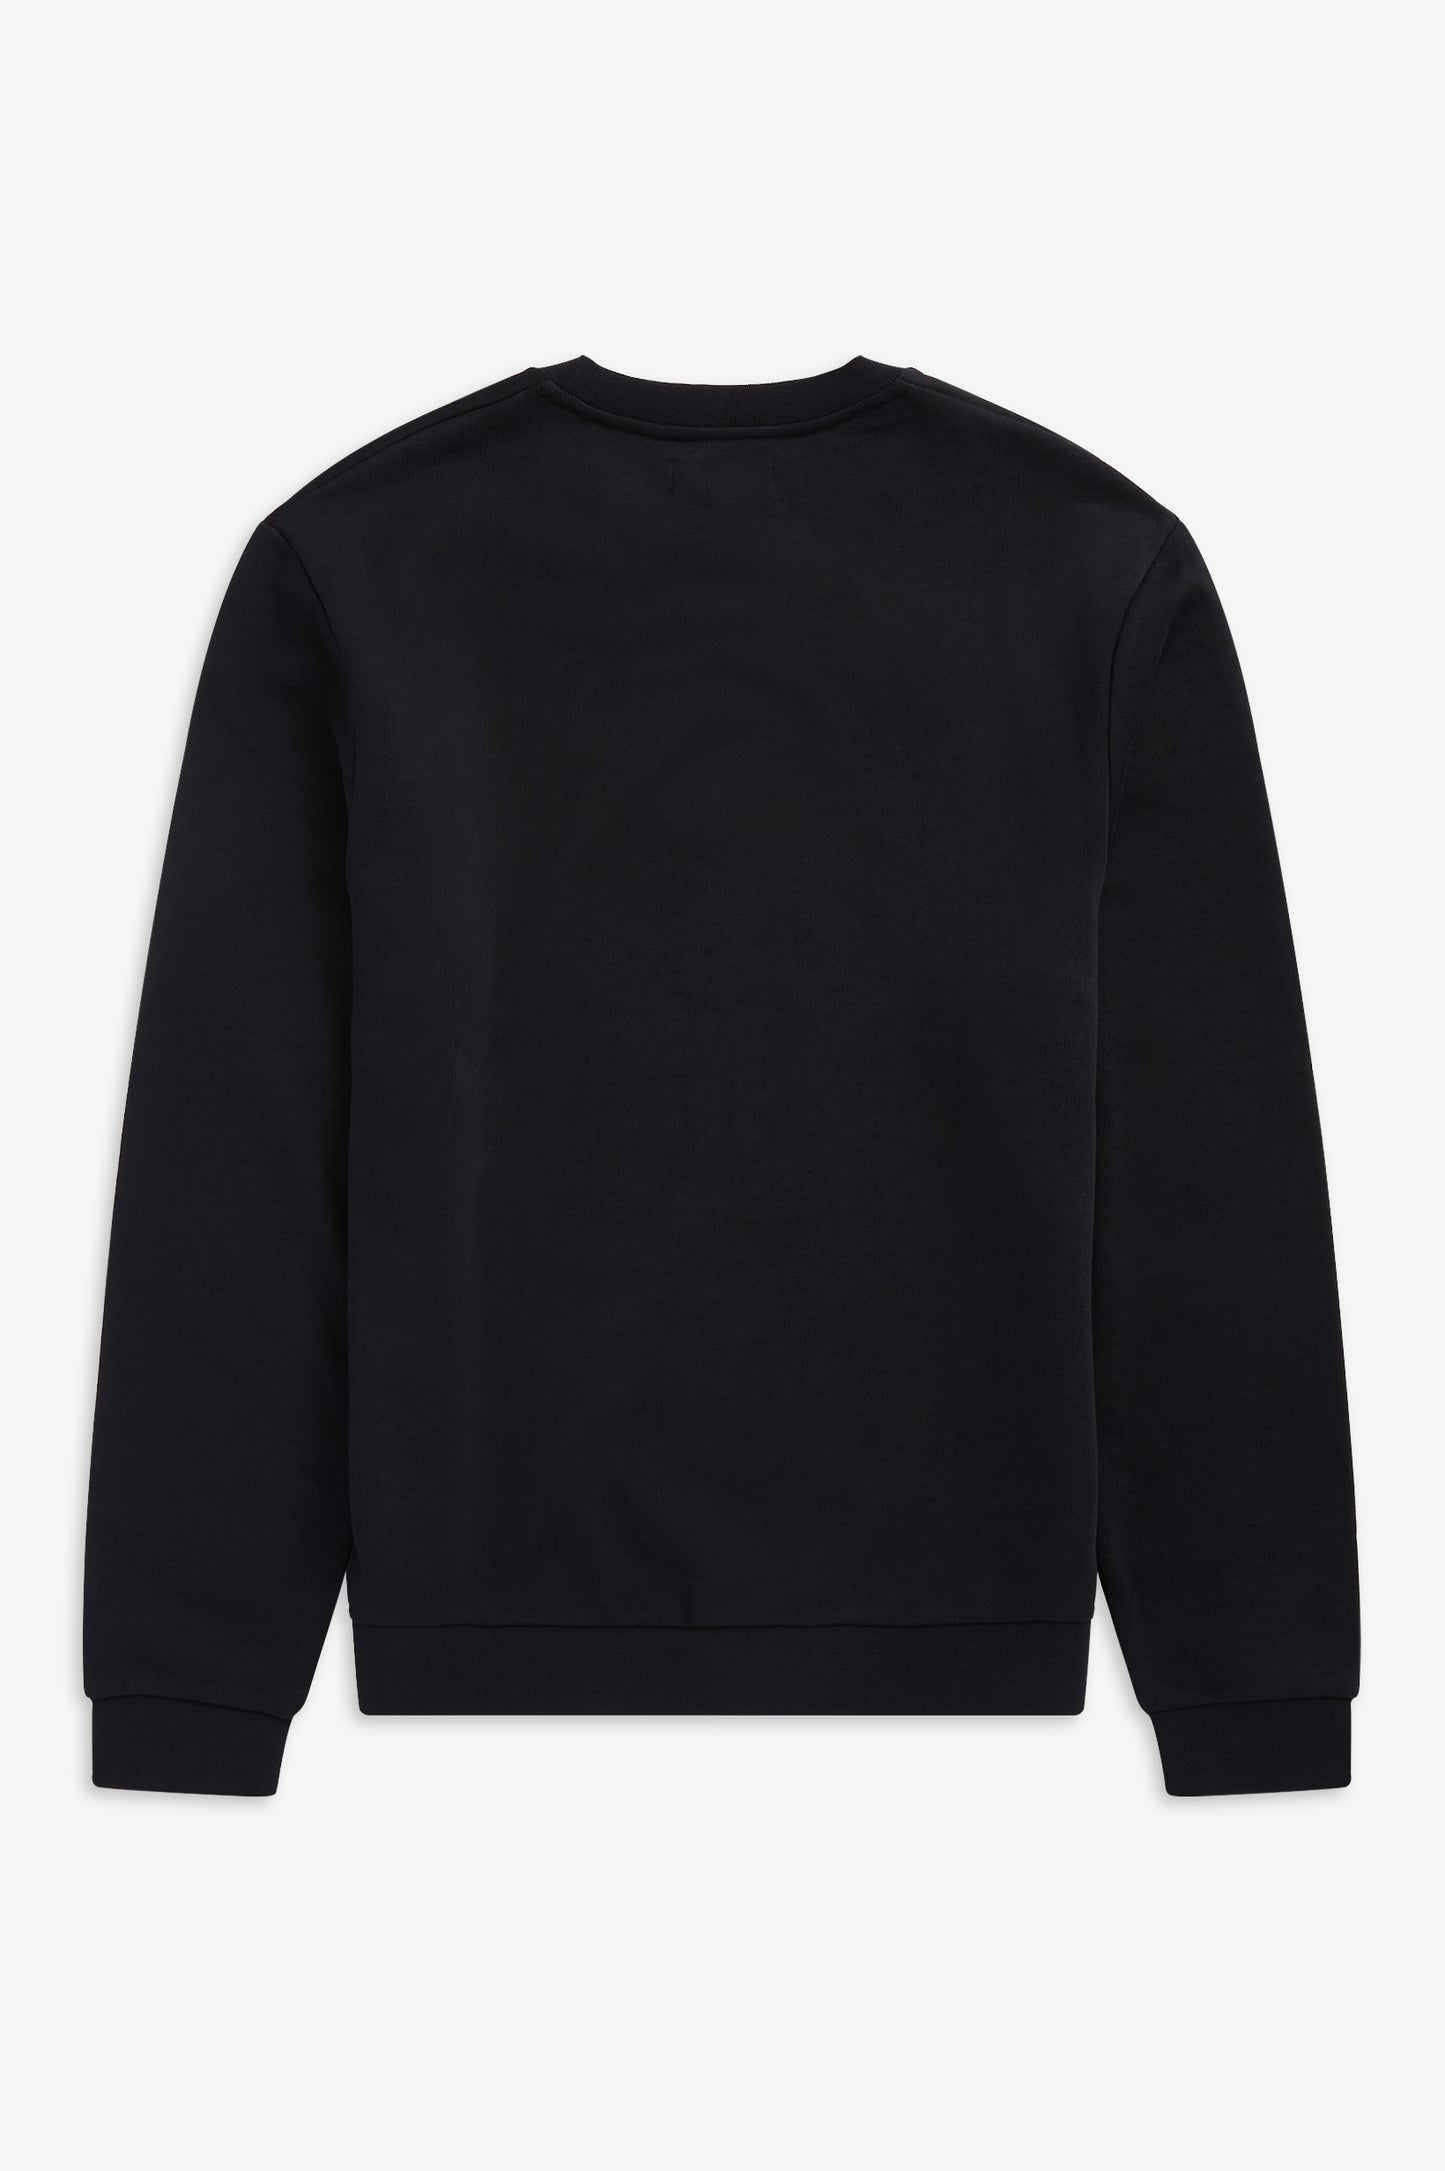 Embroidered Sweatshirt (black)